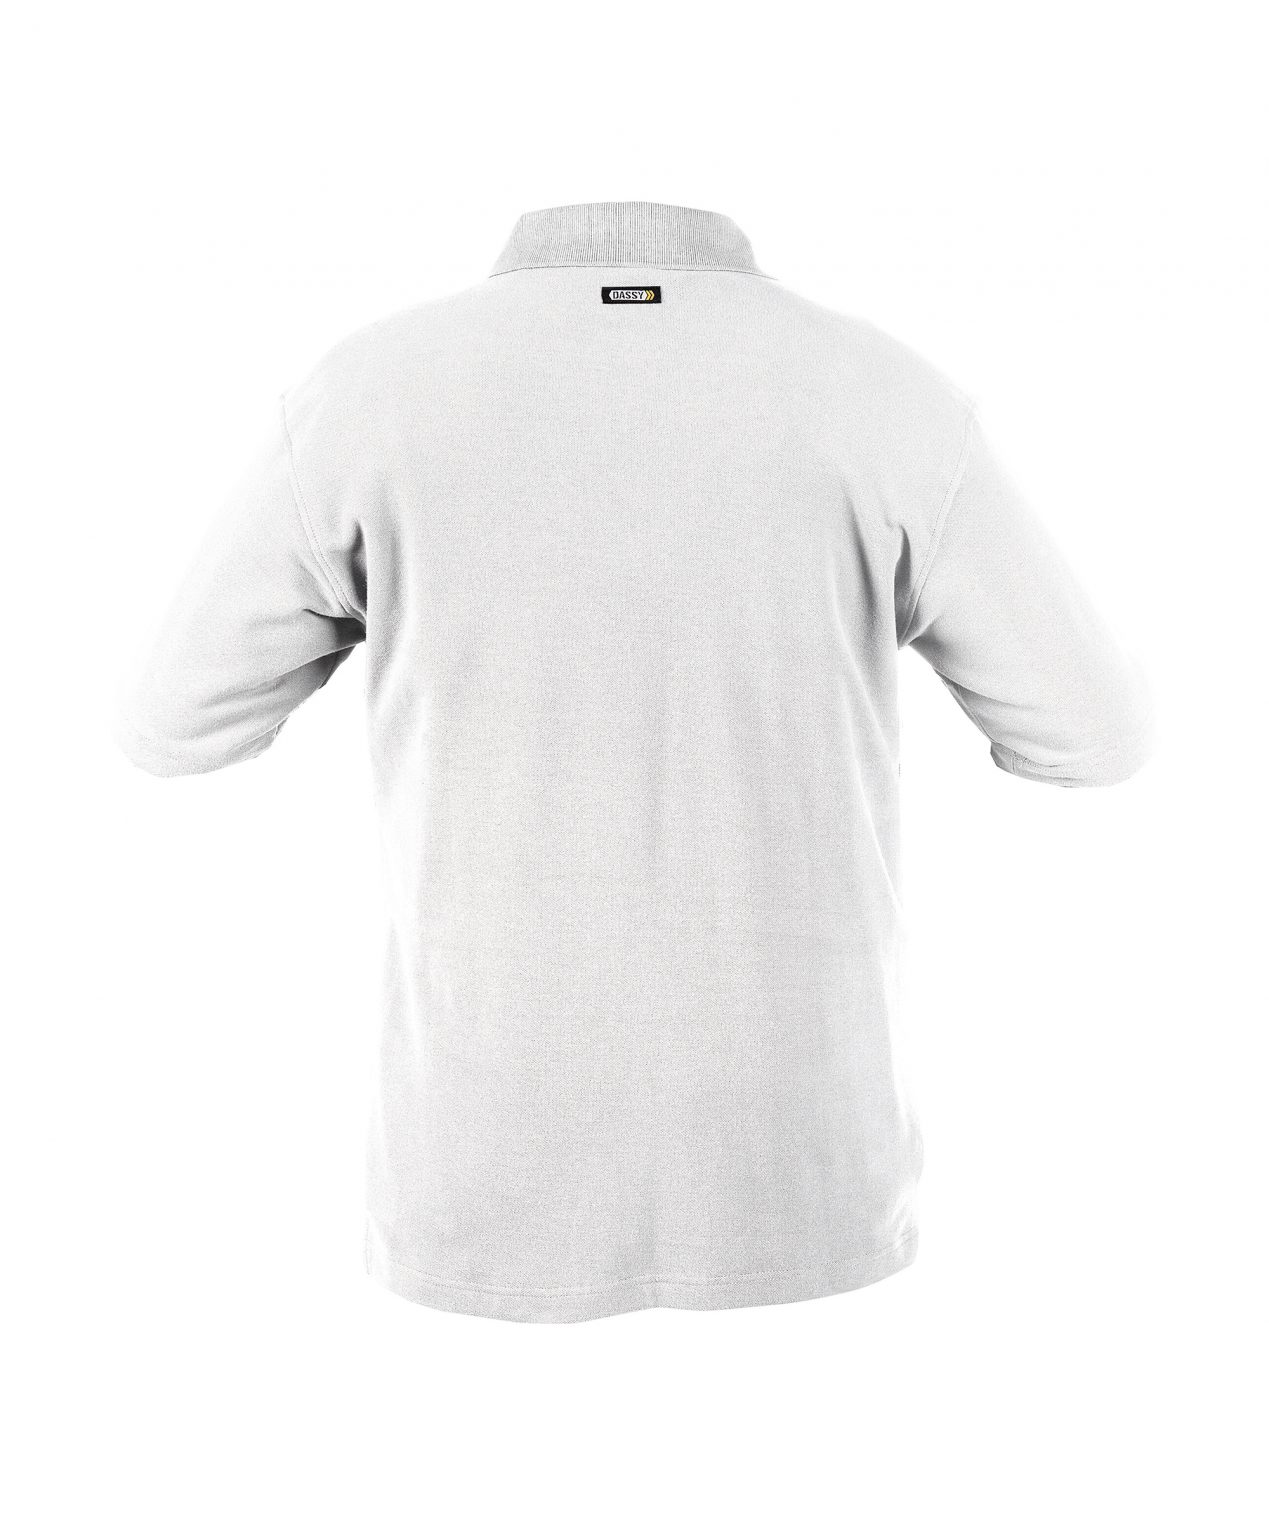 leon polo shirt white back